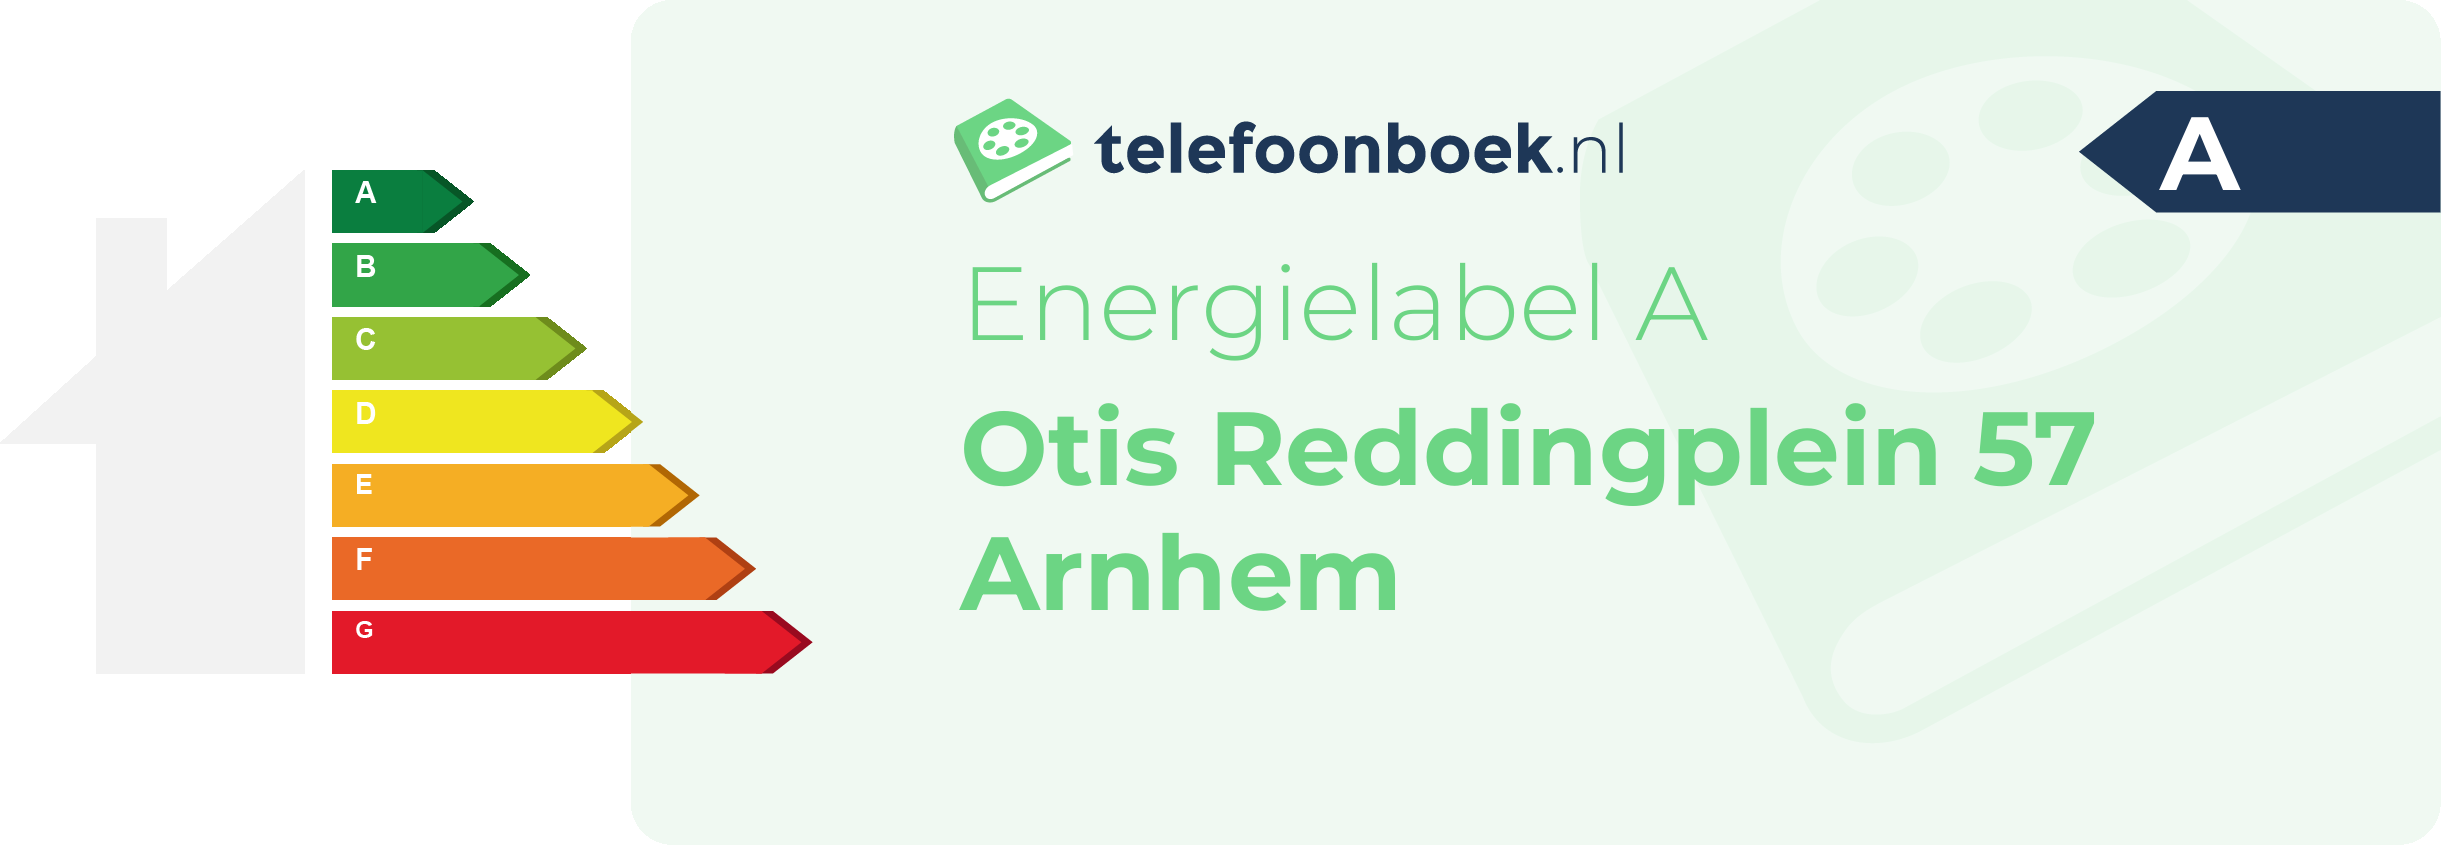 Energielabel Otis Reddingplein 57 Arnhem